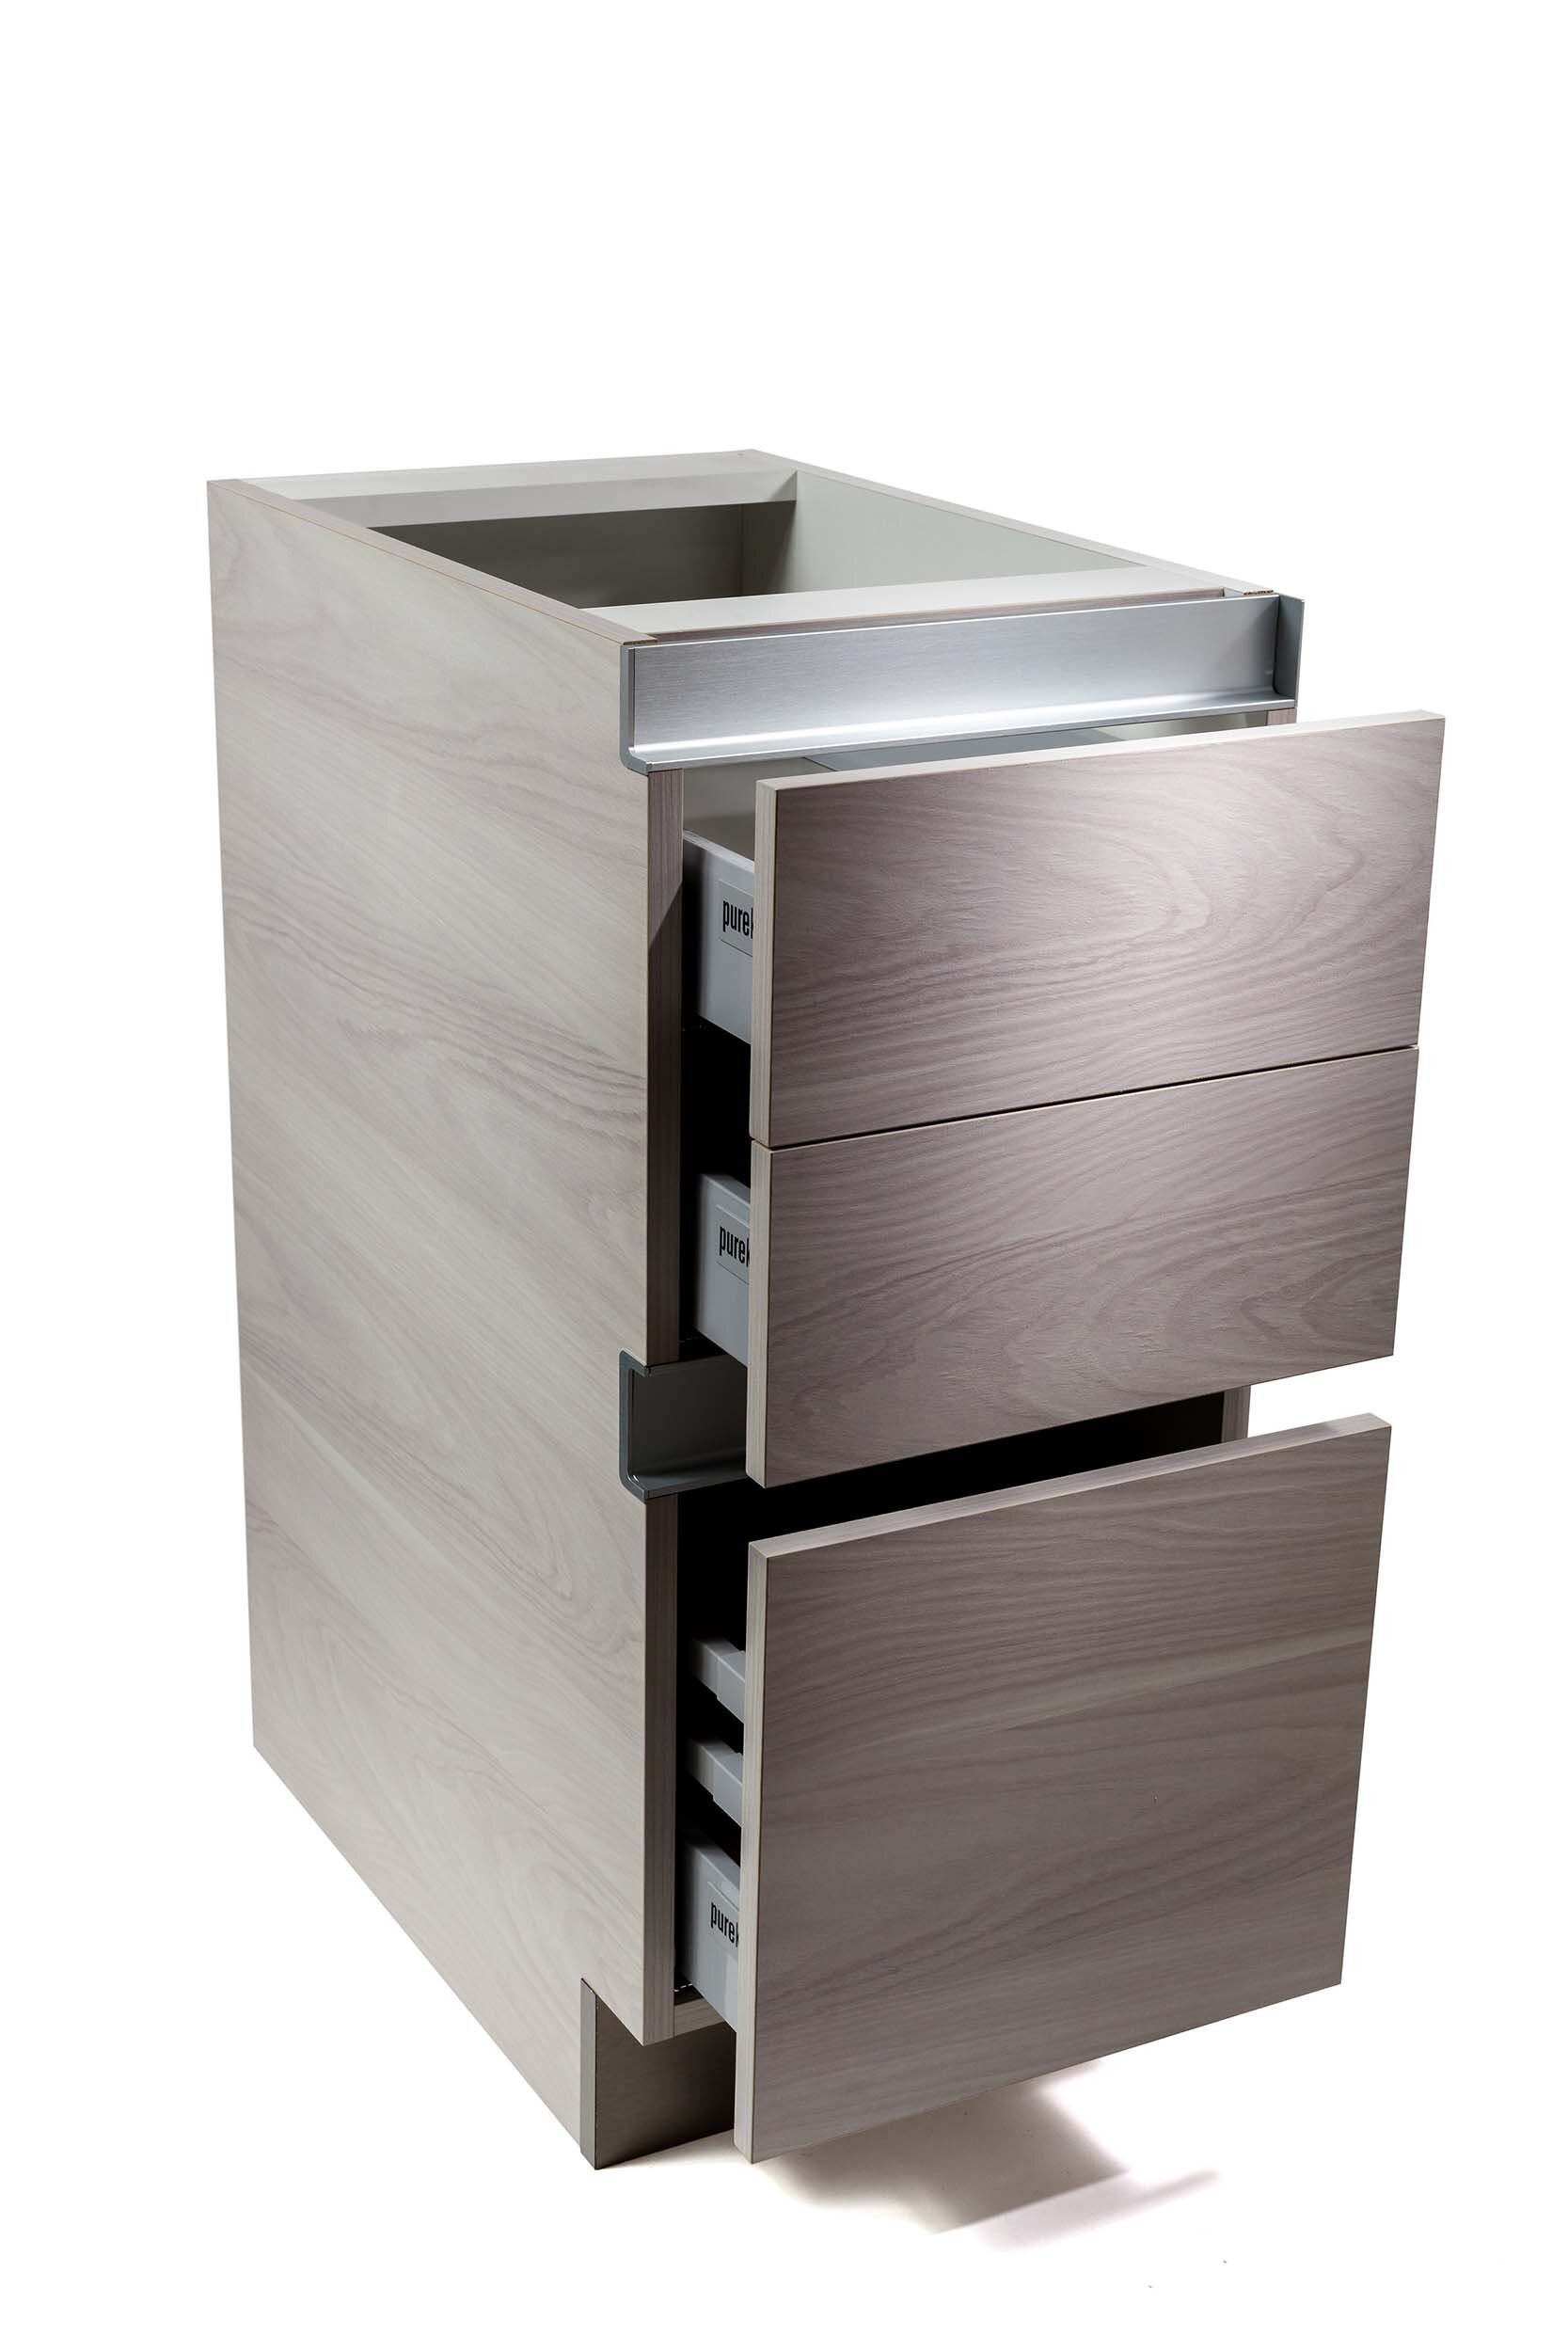 spectra-integrated-channel-handle-cabinet-machi-silver-sand-cleaf-textured-melamine-open.jpg